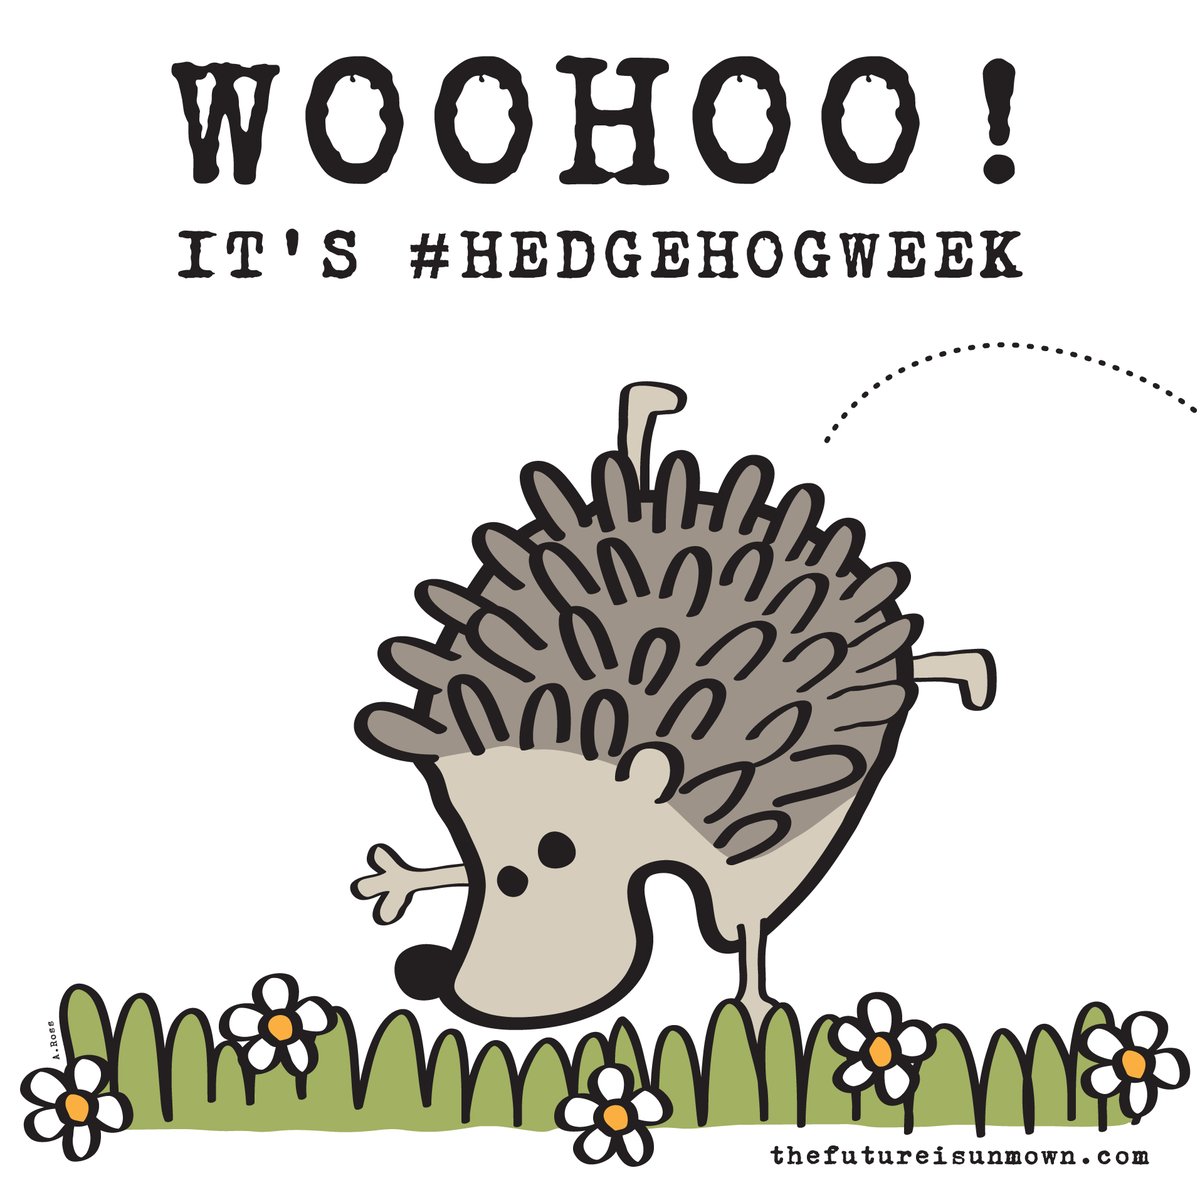 Gary's very happy! 😄🦔💚 #HedgehogWeek #hedgehog #hedgehogawarenessweek #hedgehoglove #hedgehoglife #hedgehogrescue #thefutureisunmown